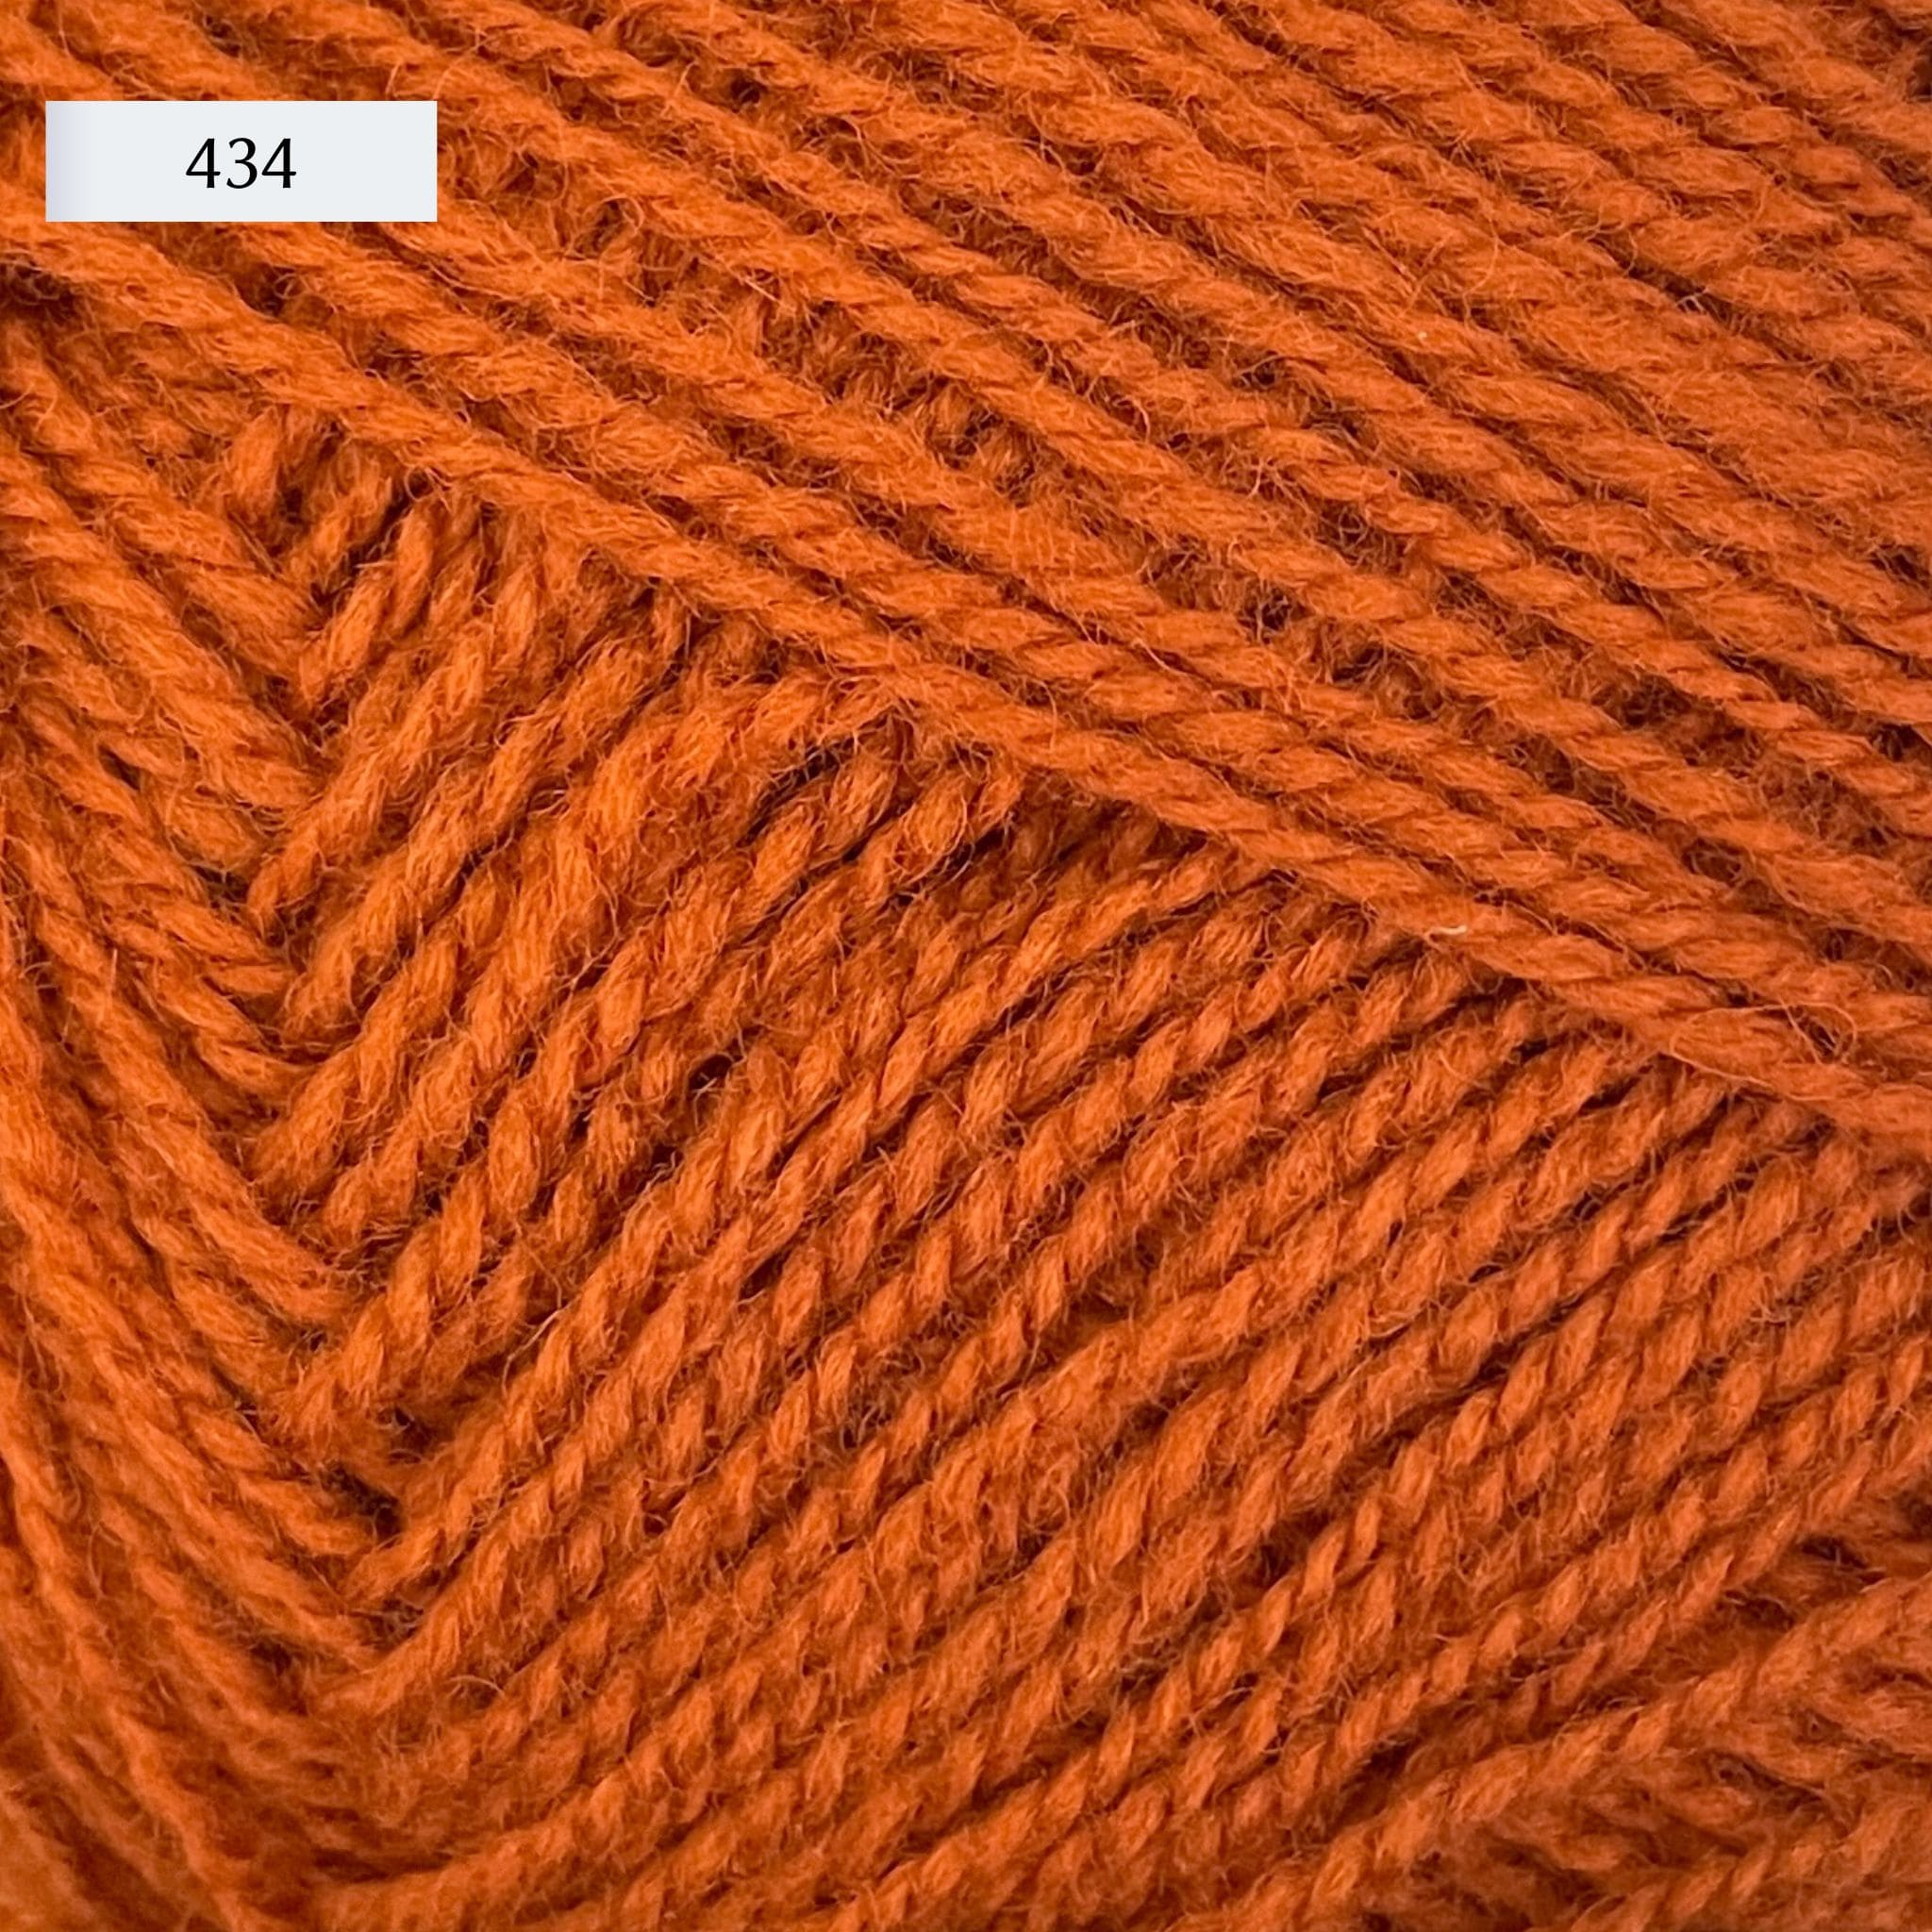 Rauma Gammelserie 2ply wool yarn, fingering weight, in color 434, pumpkin orange